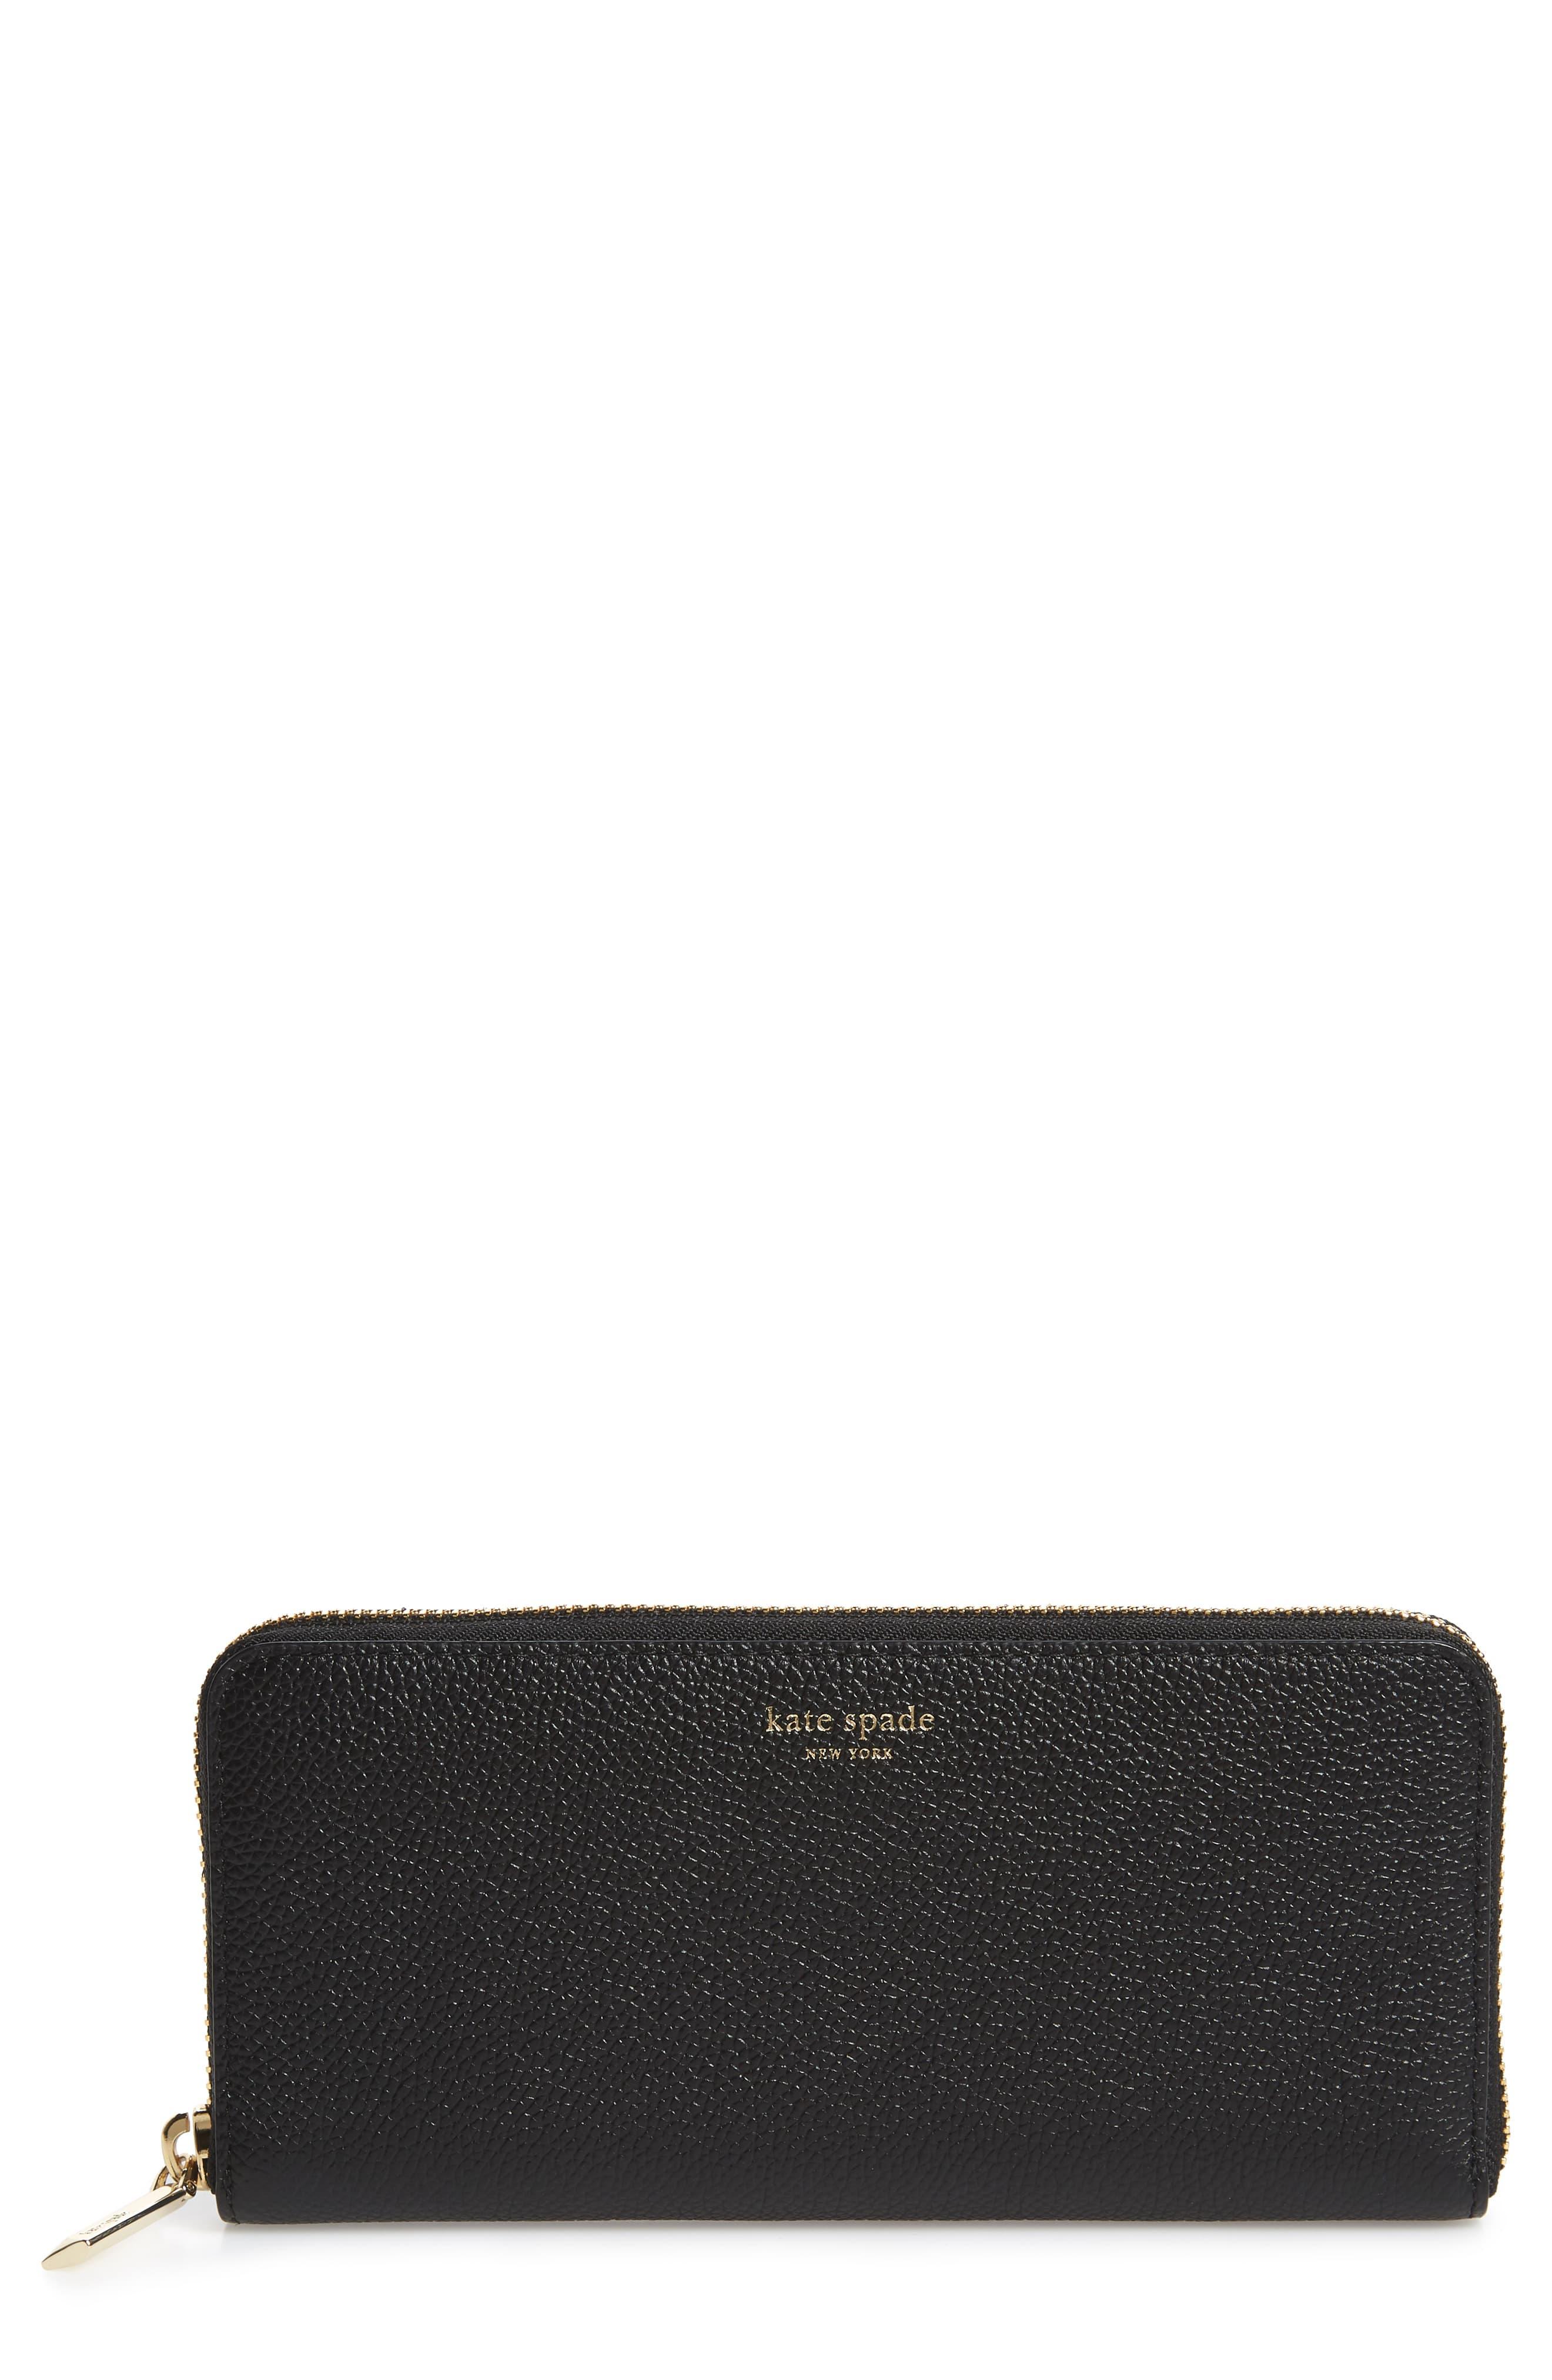 Kate Spade Margaux Slim Continental Wallet in Black - Lyst